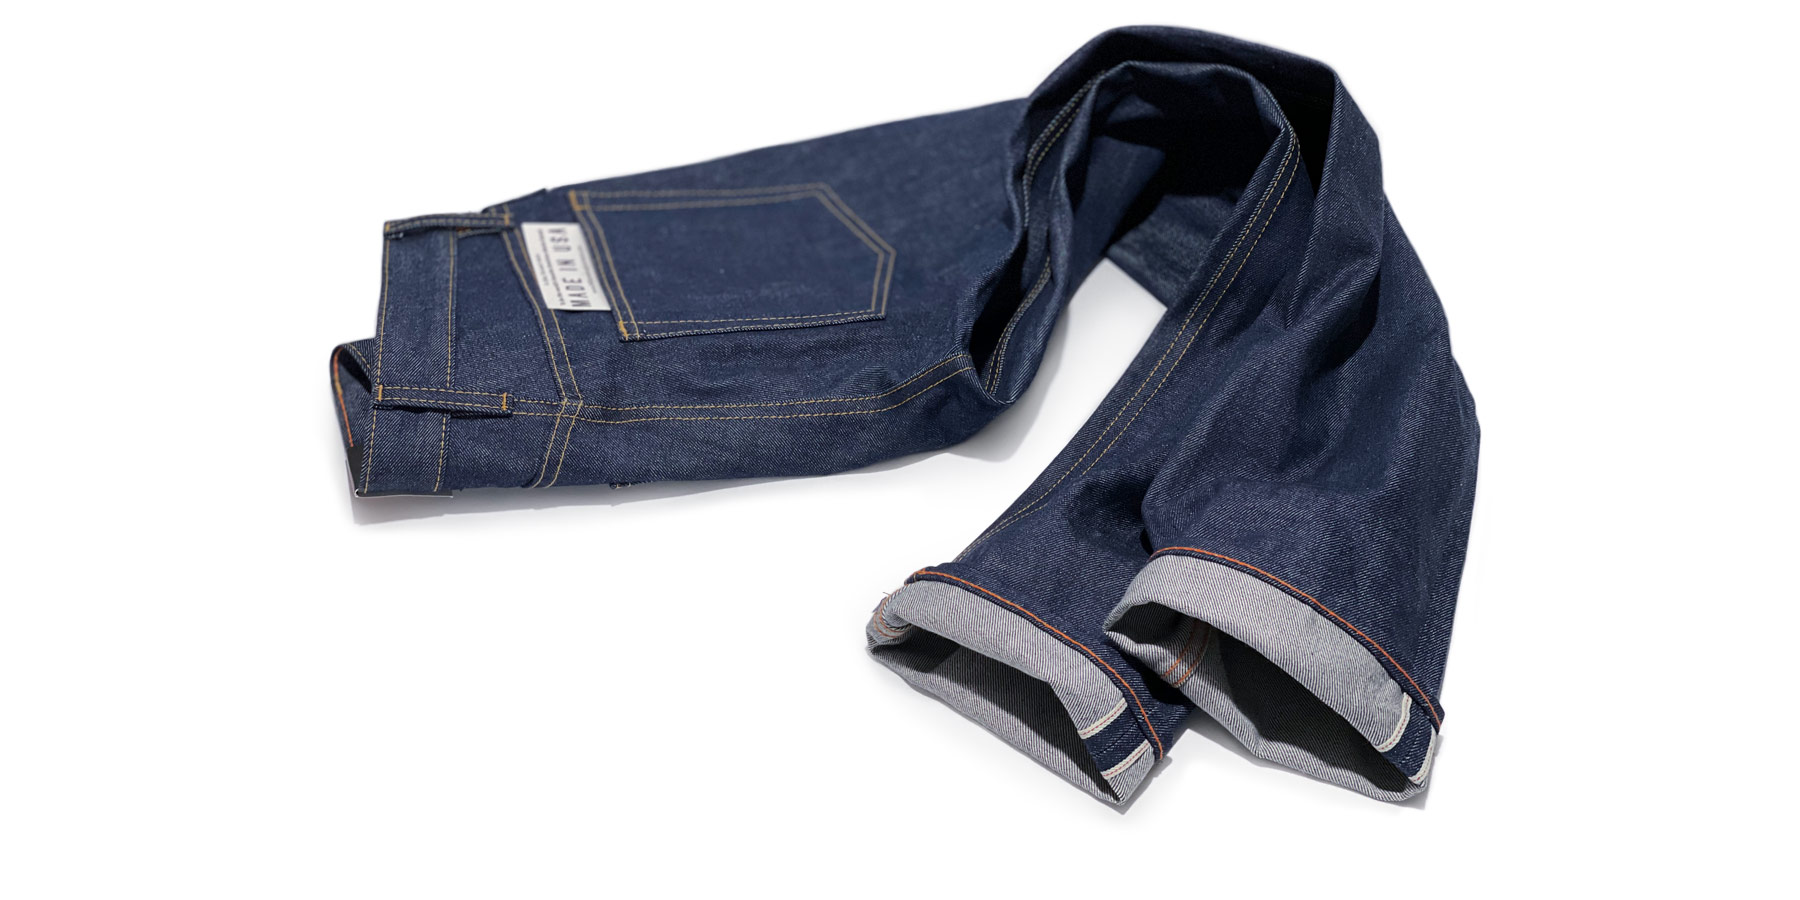 Cone White Oak selvedge denim American-made jeans sale by Williamsburg Garment Co. NYC